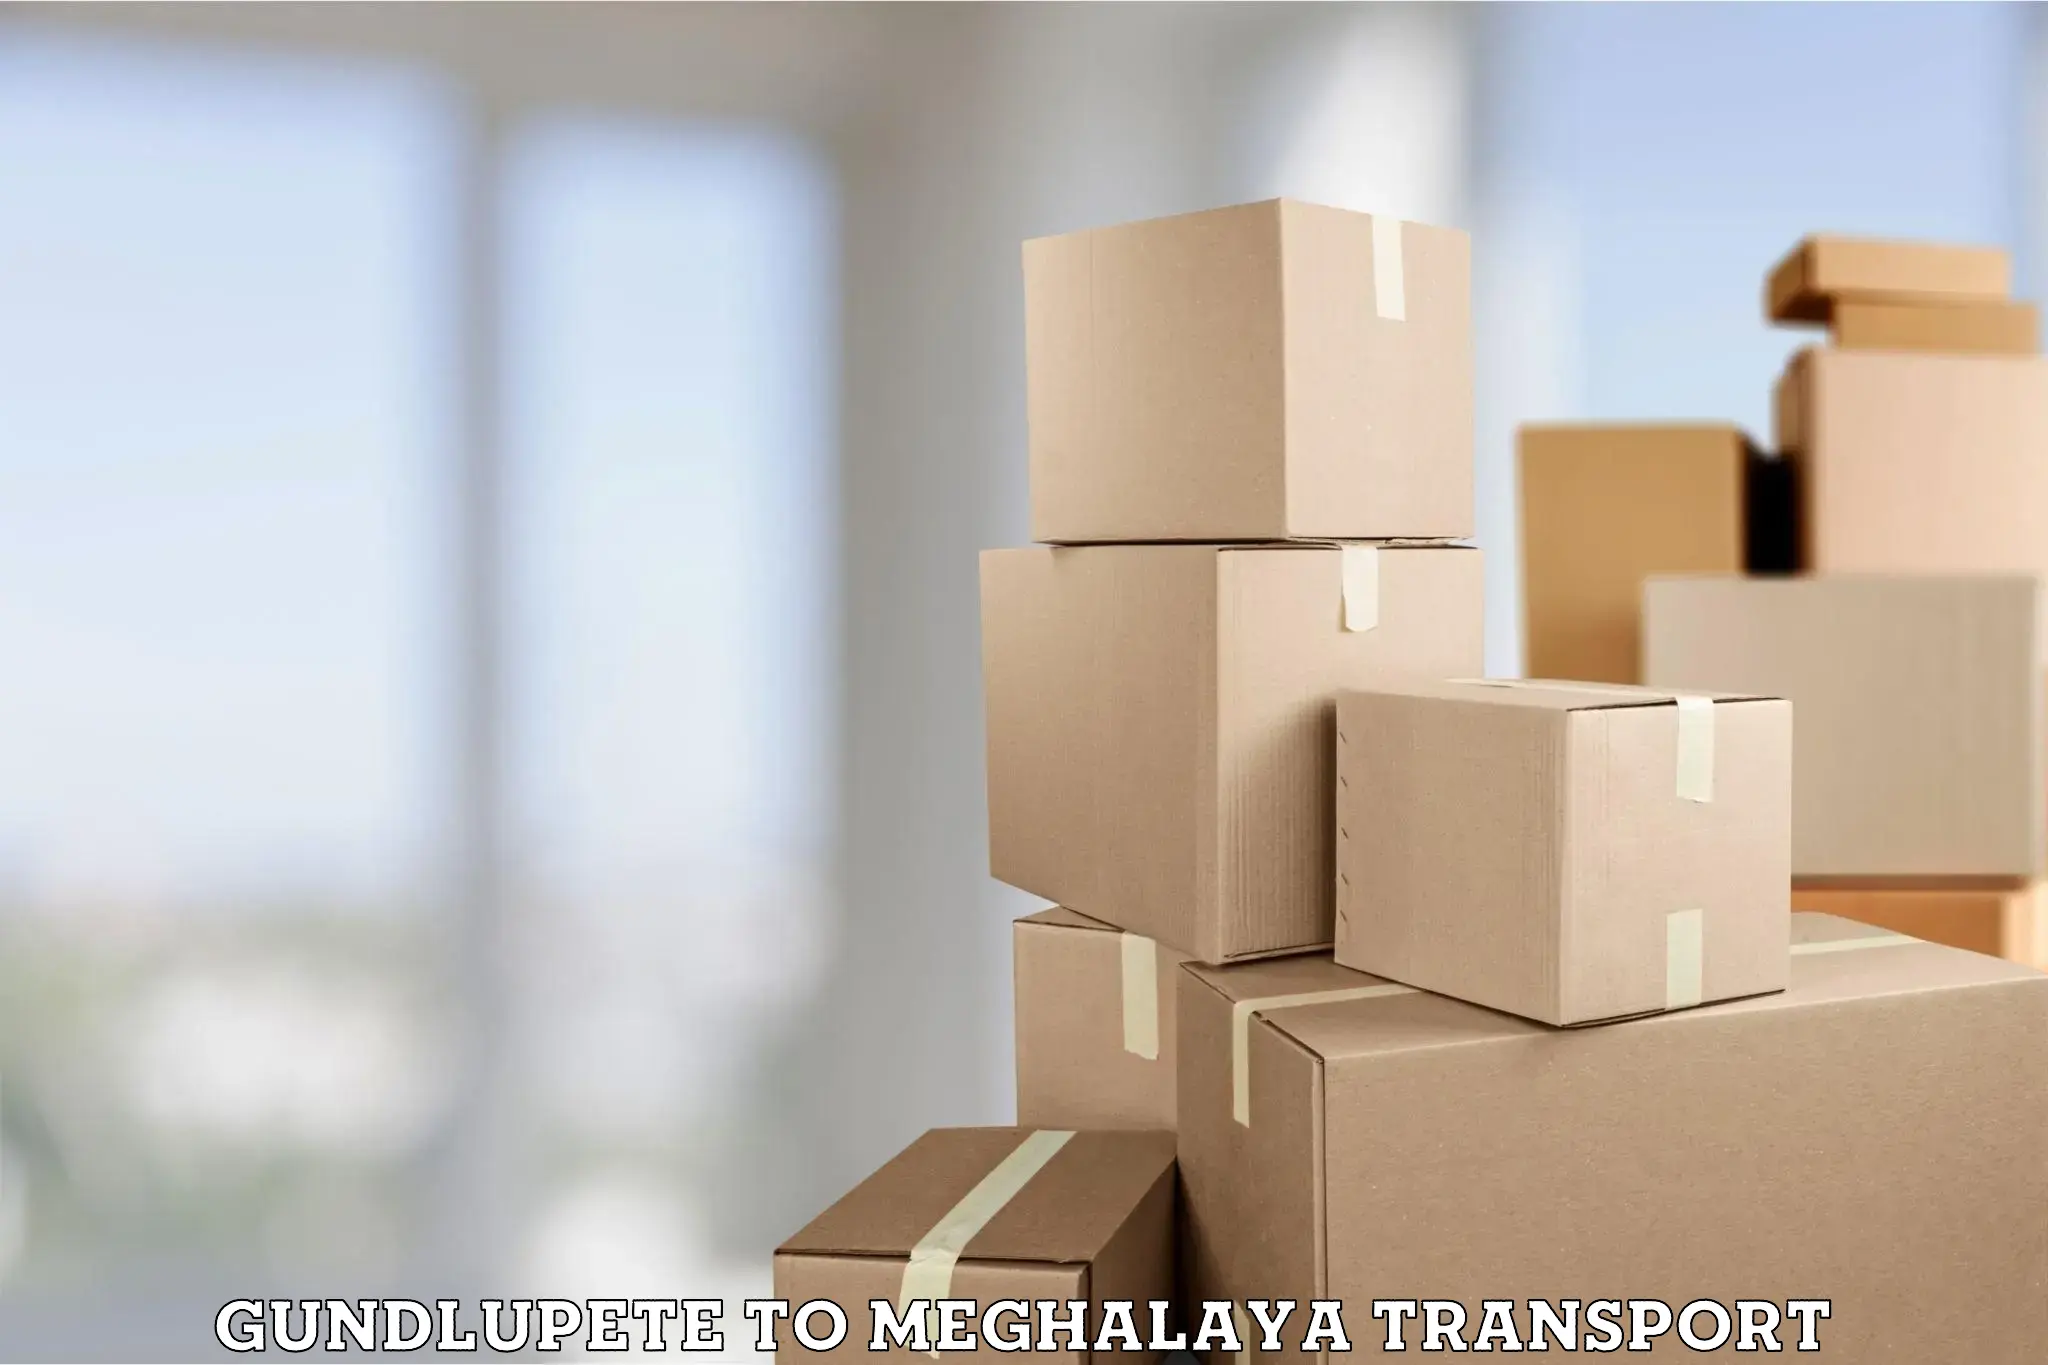 Truck transport companies in India Gundlupete to Meghalaya